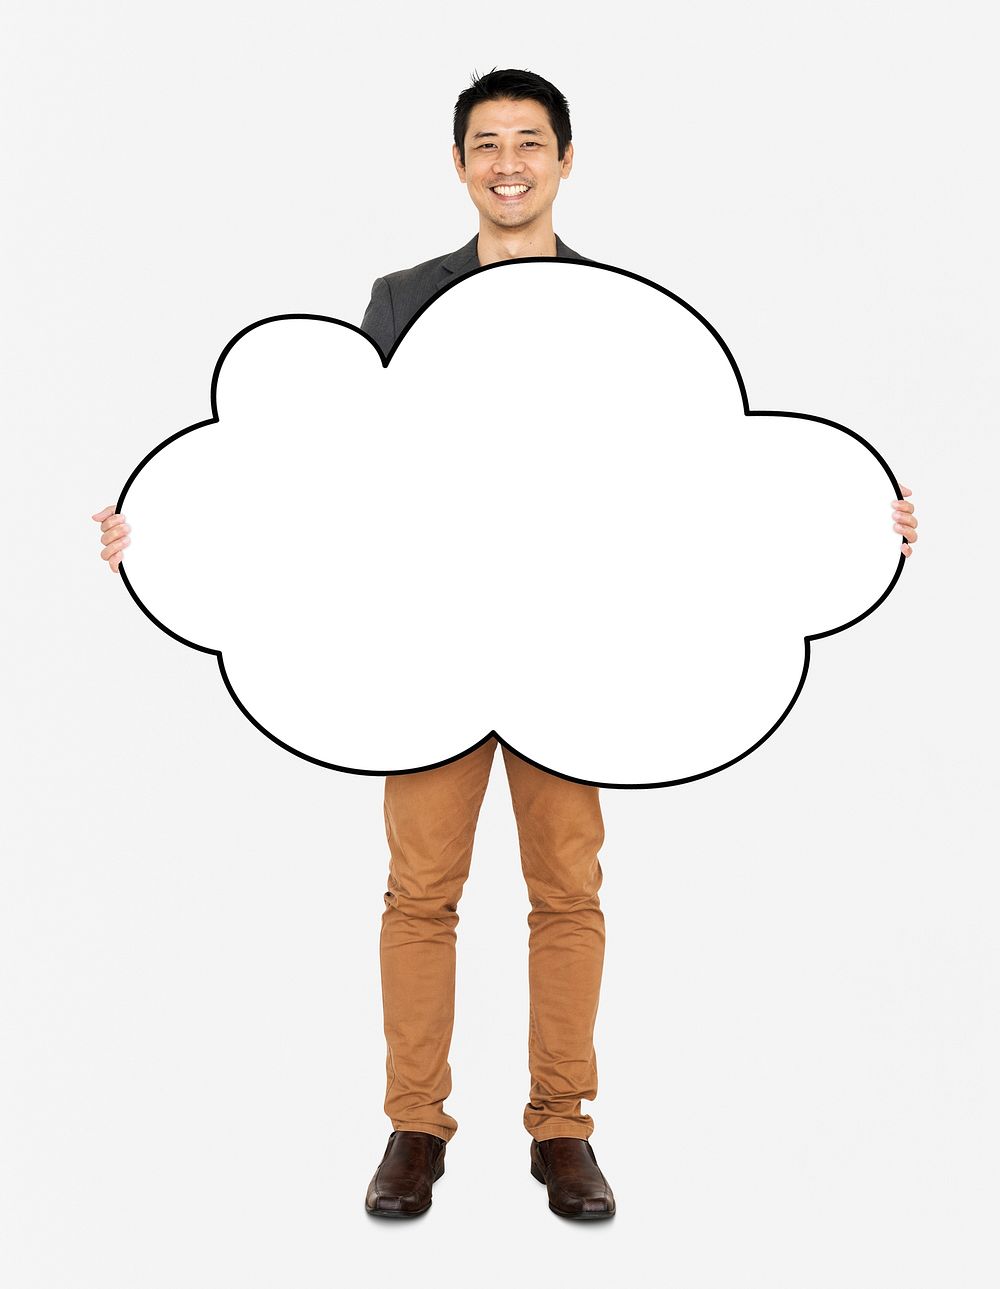 Cheerful man showing a blank cloud shaped board